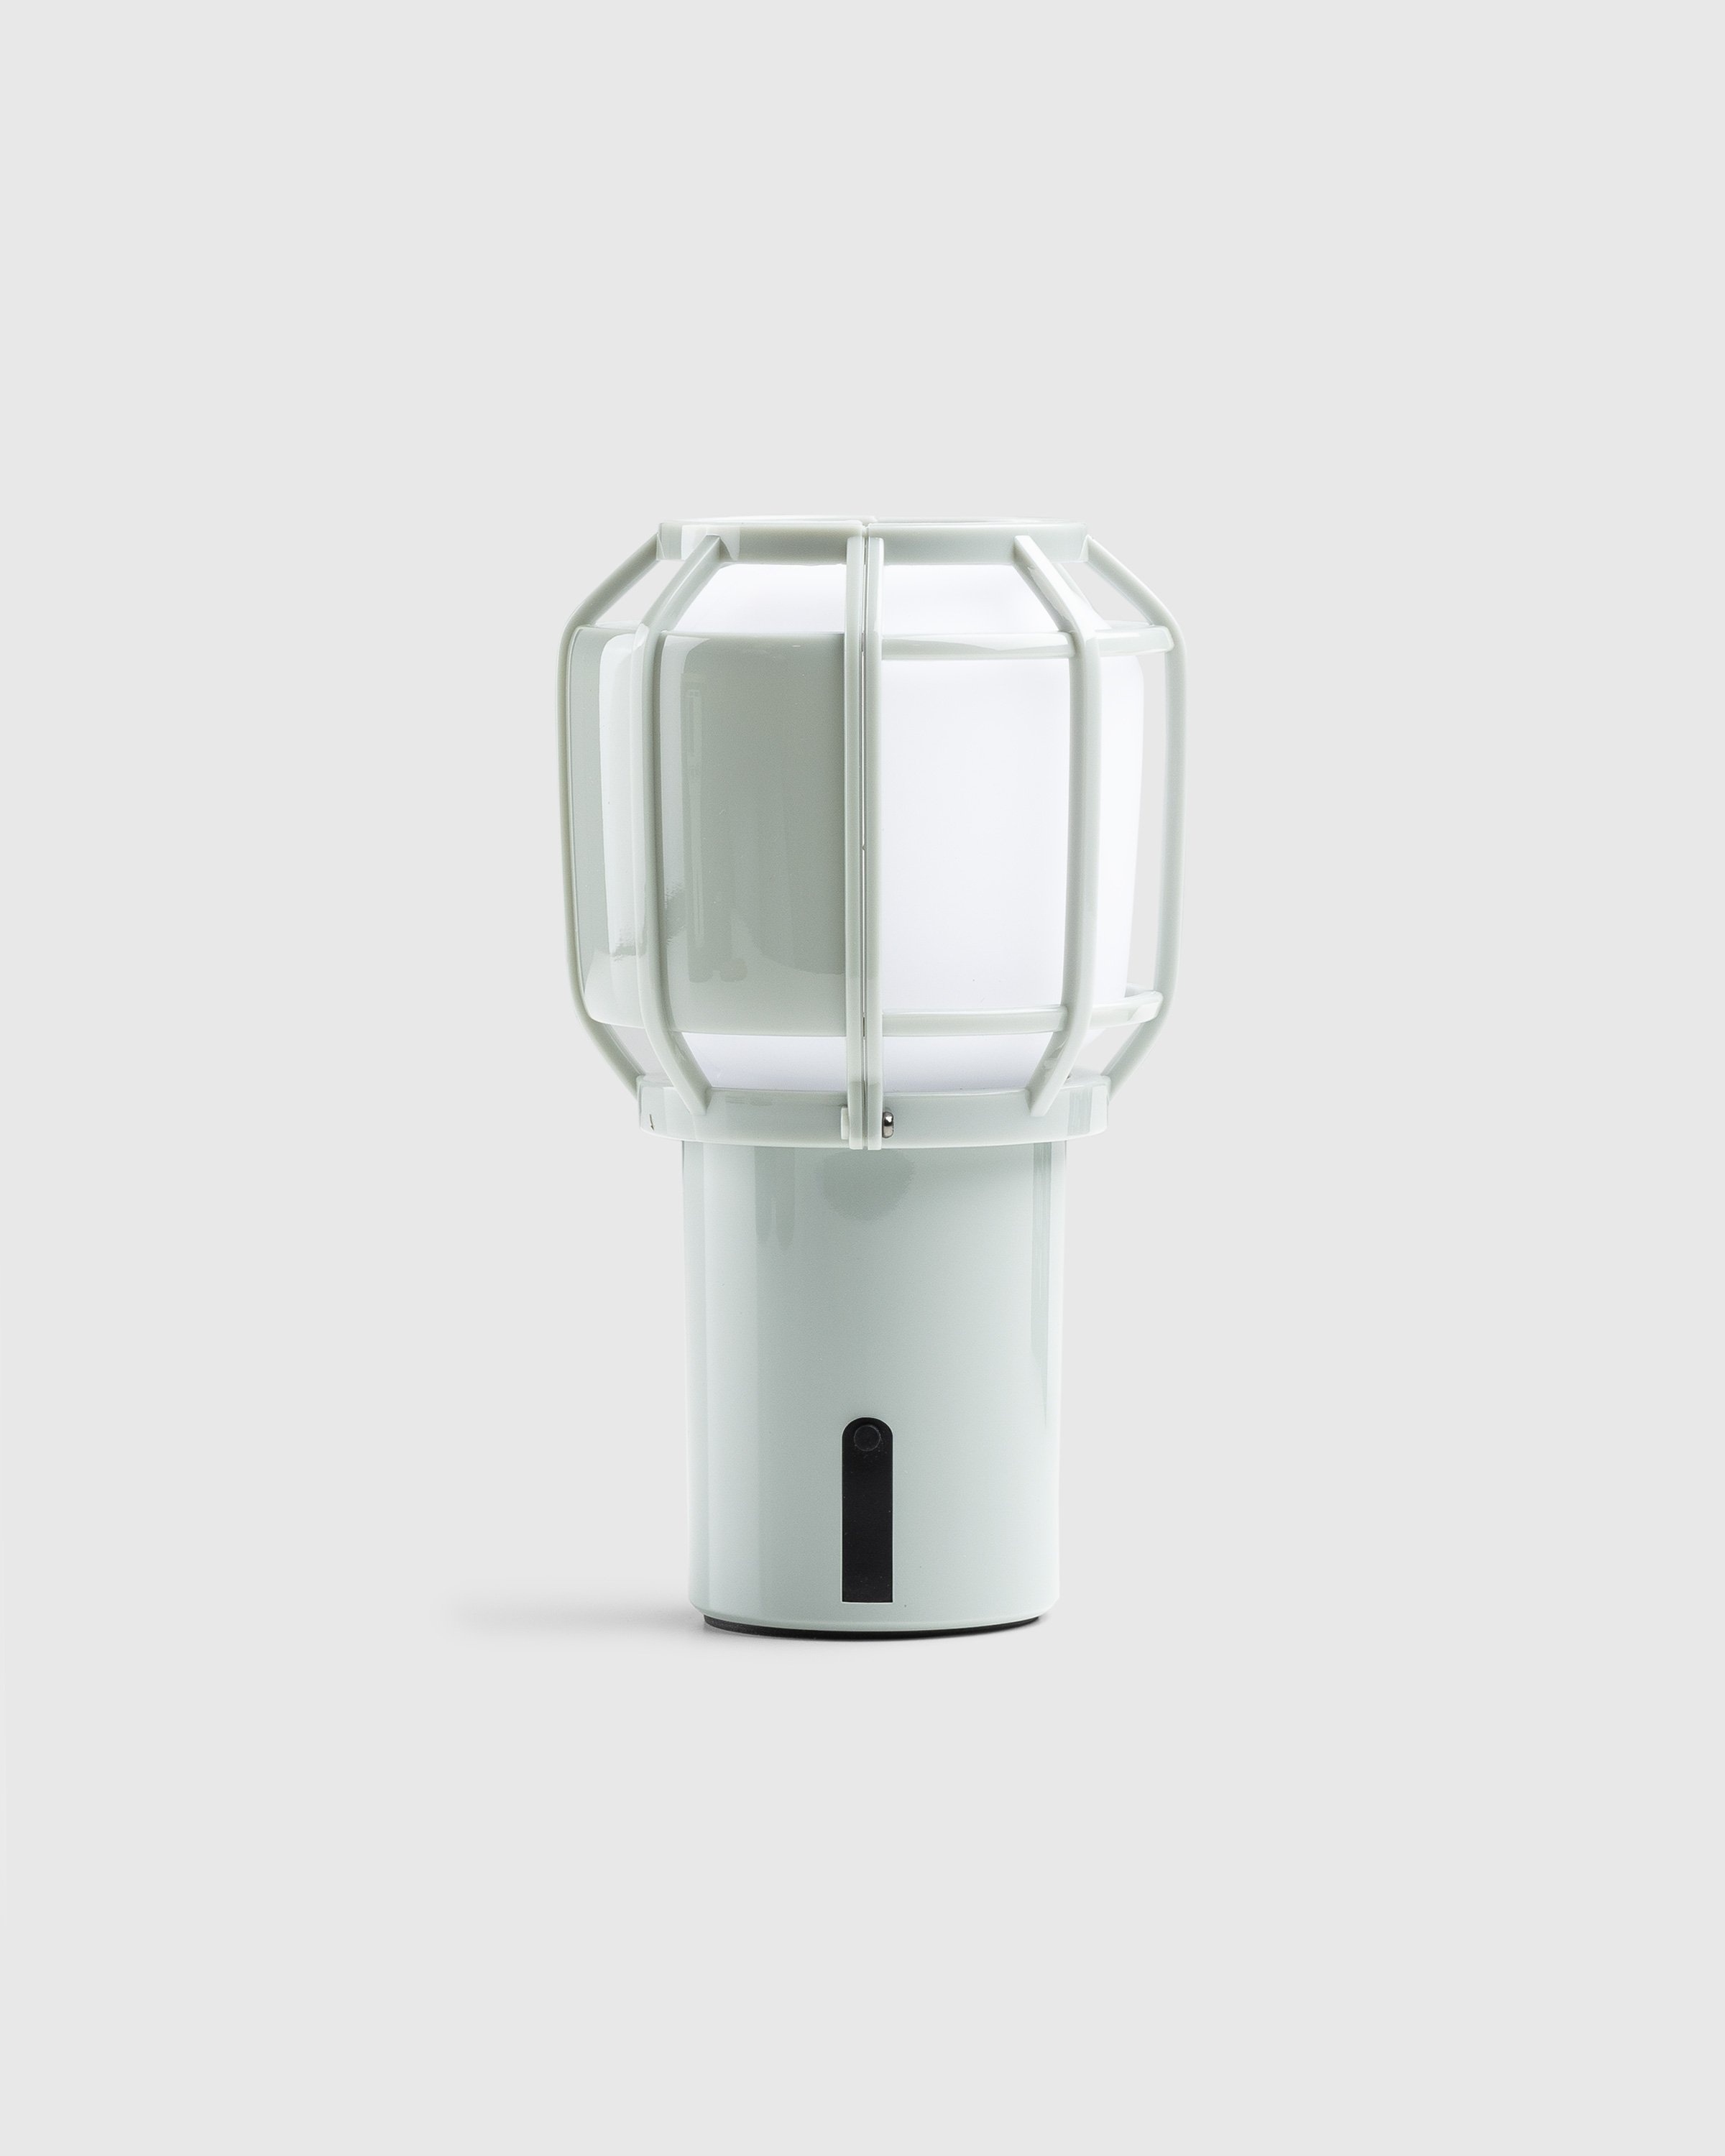 Carhartt WIP – Chispa Lamp by Joan Gaspar | Highsnobiety Shop